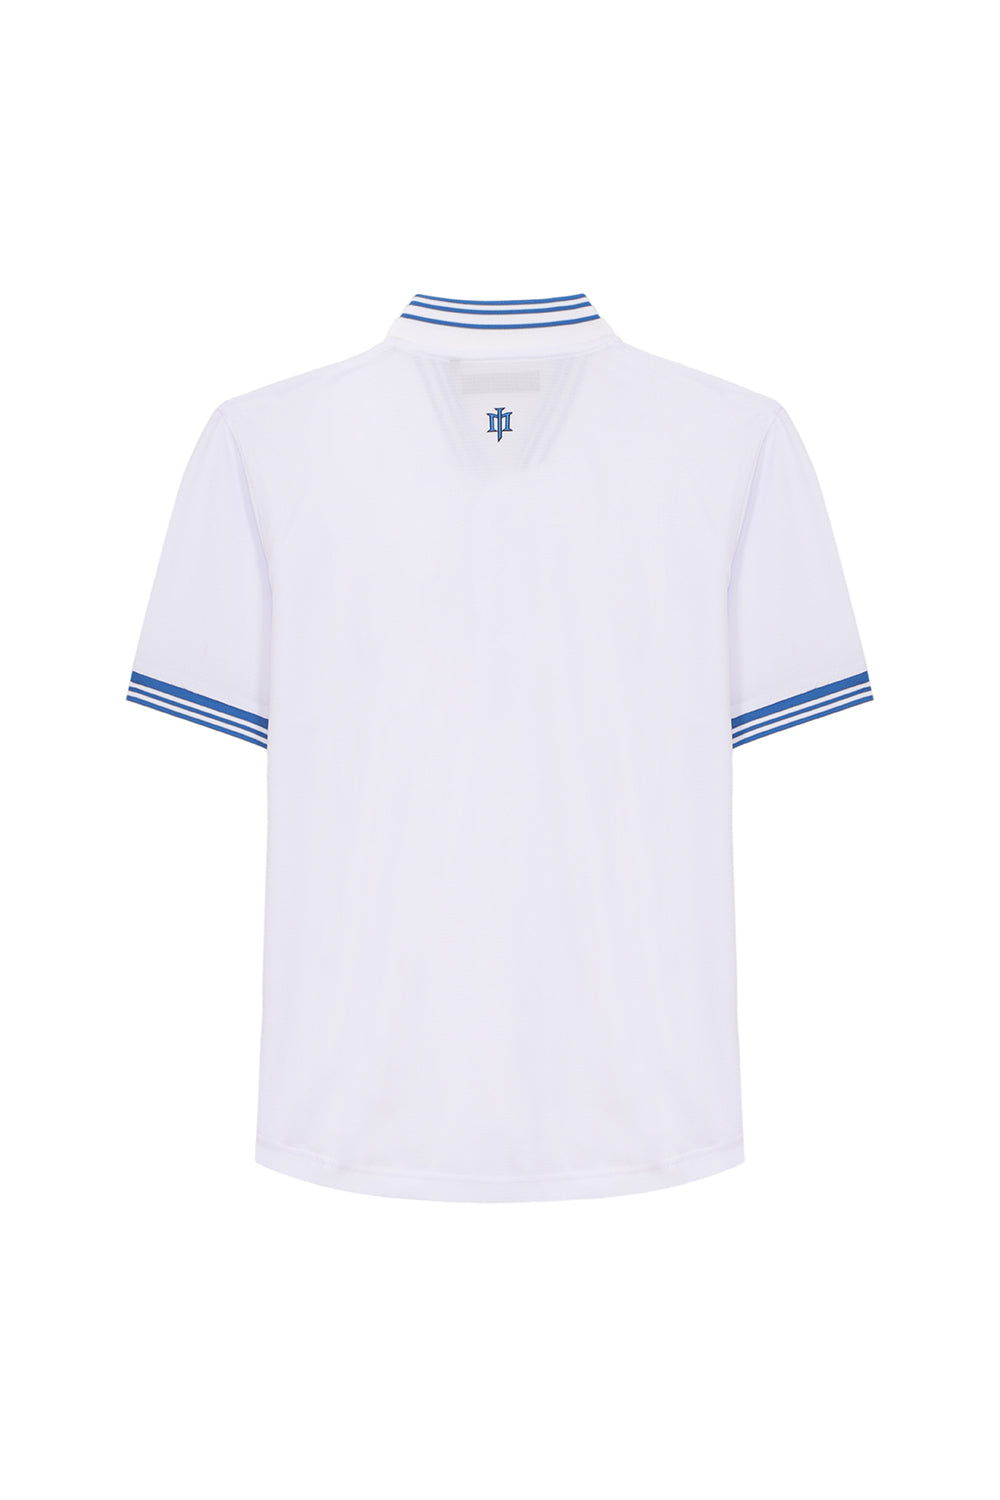 Baseball White Shirt